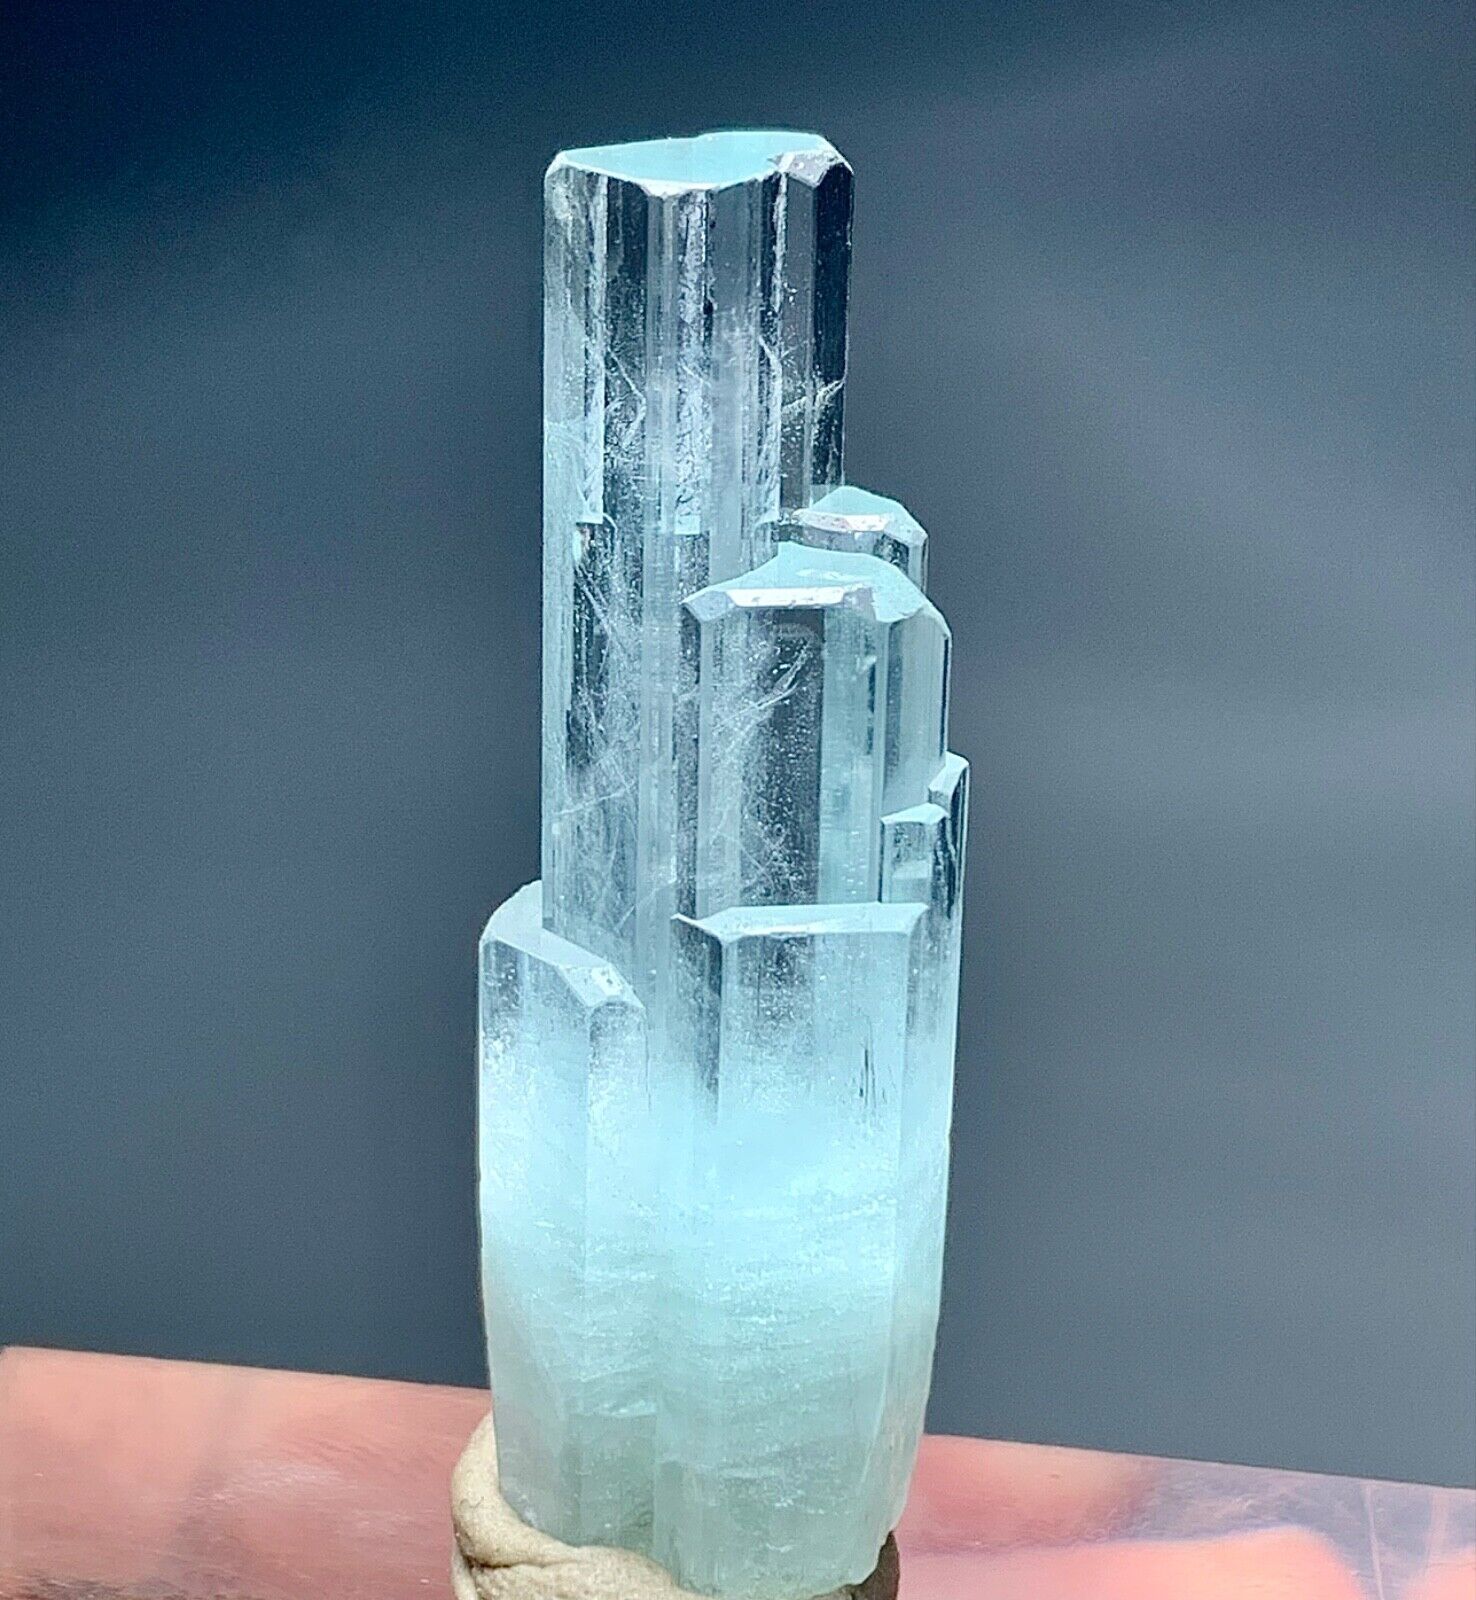 37 Carat Terminated Aquamarine Crystal From Shigar Pakistan